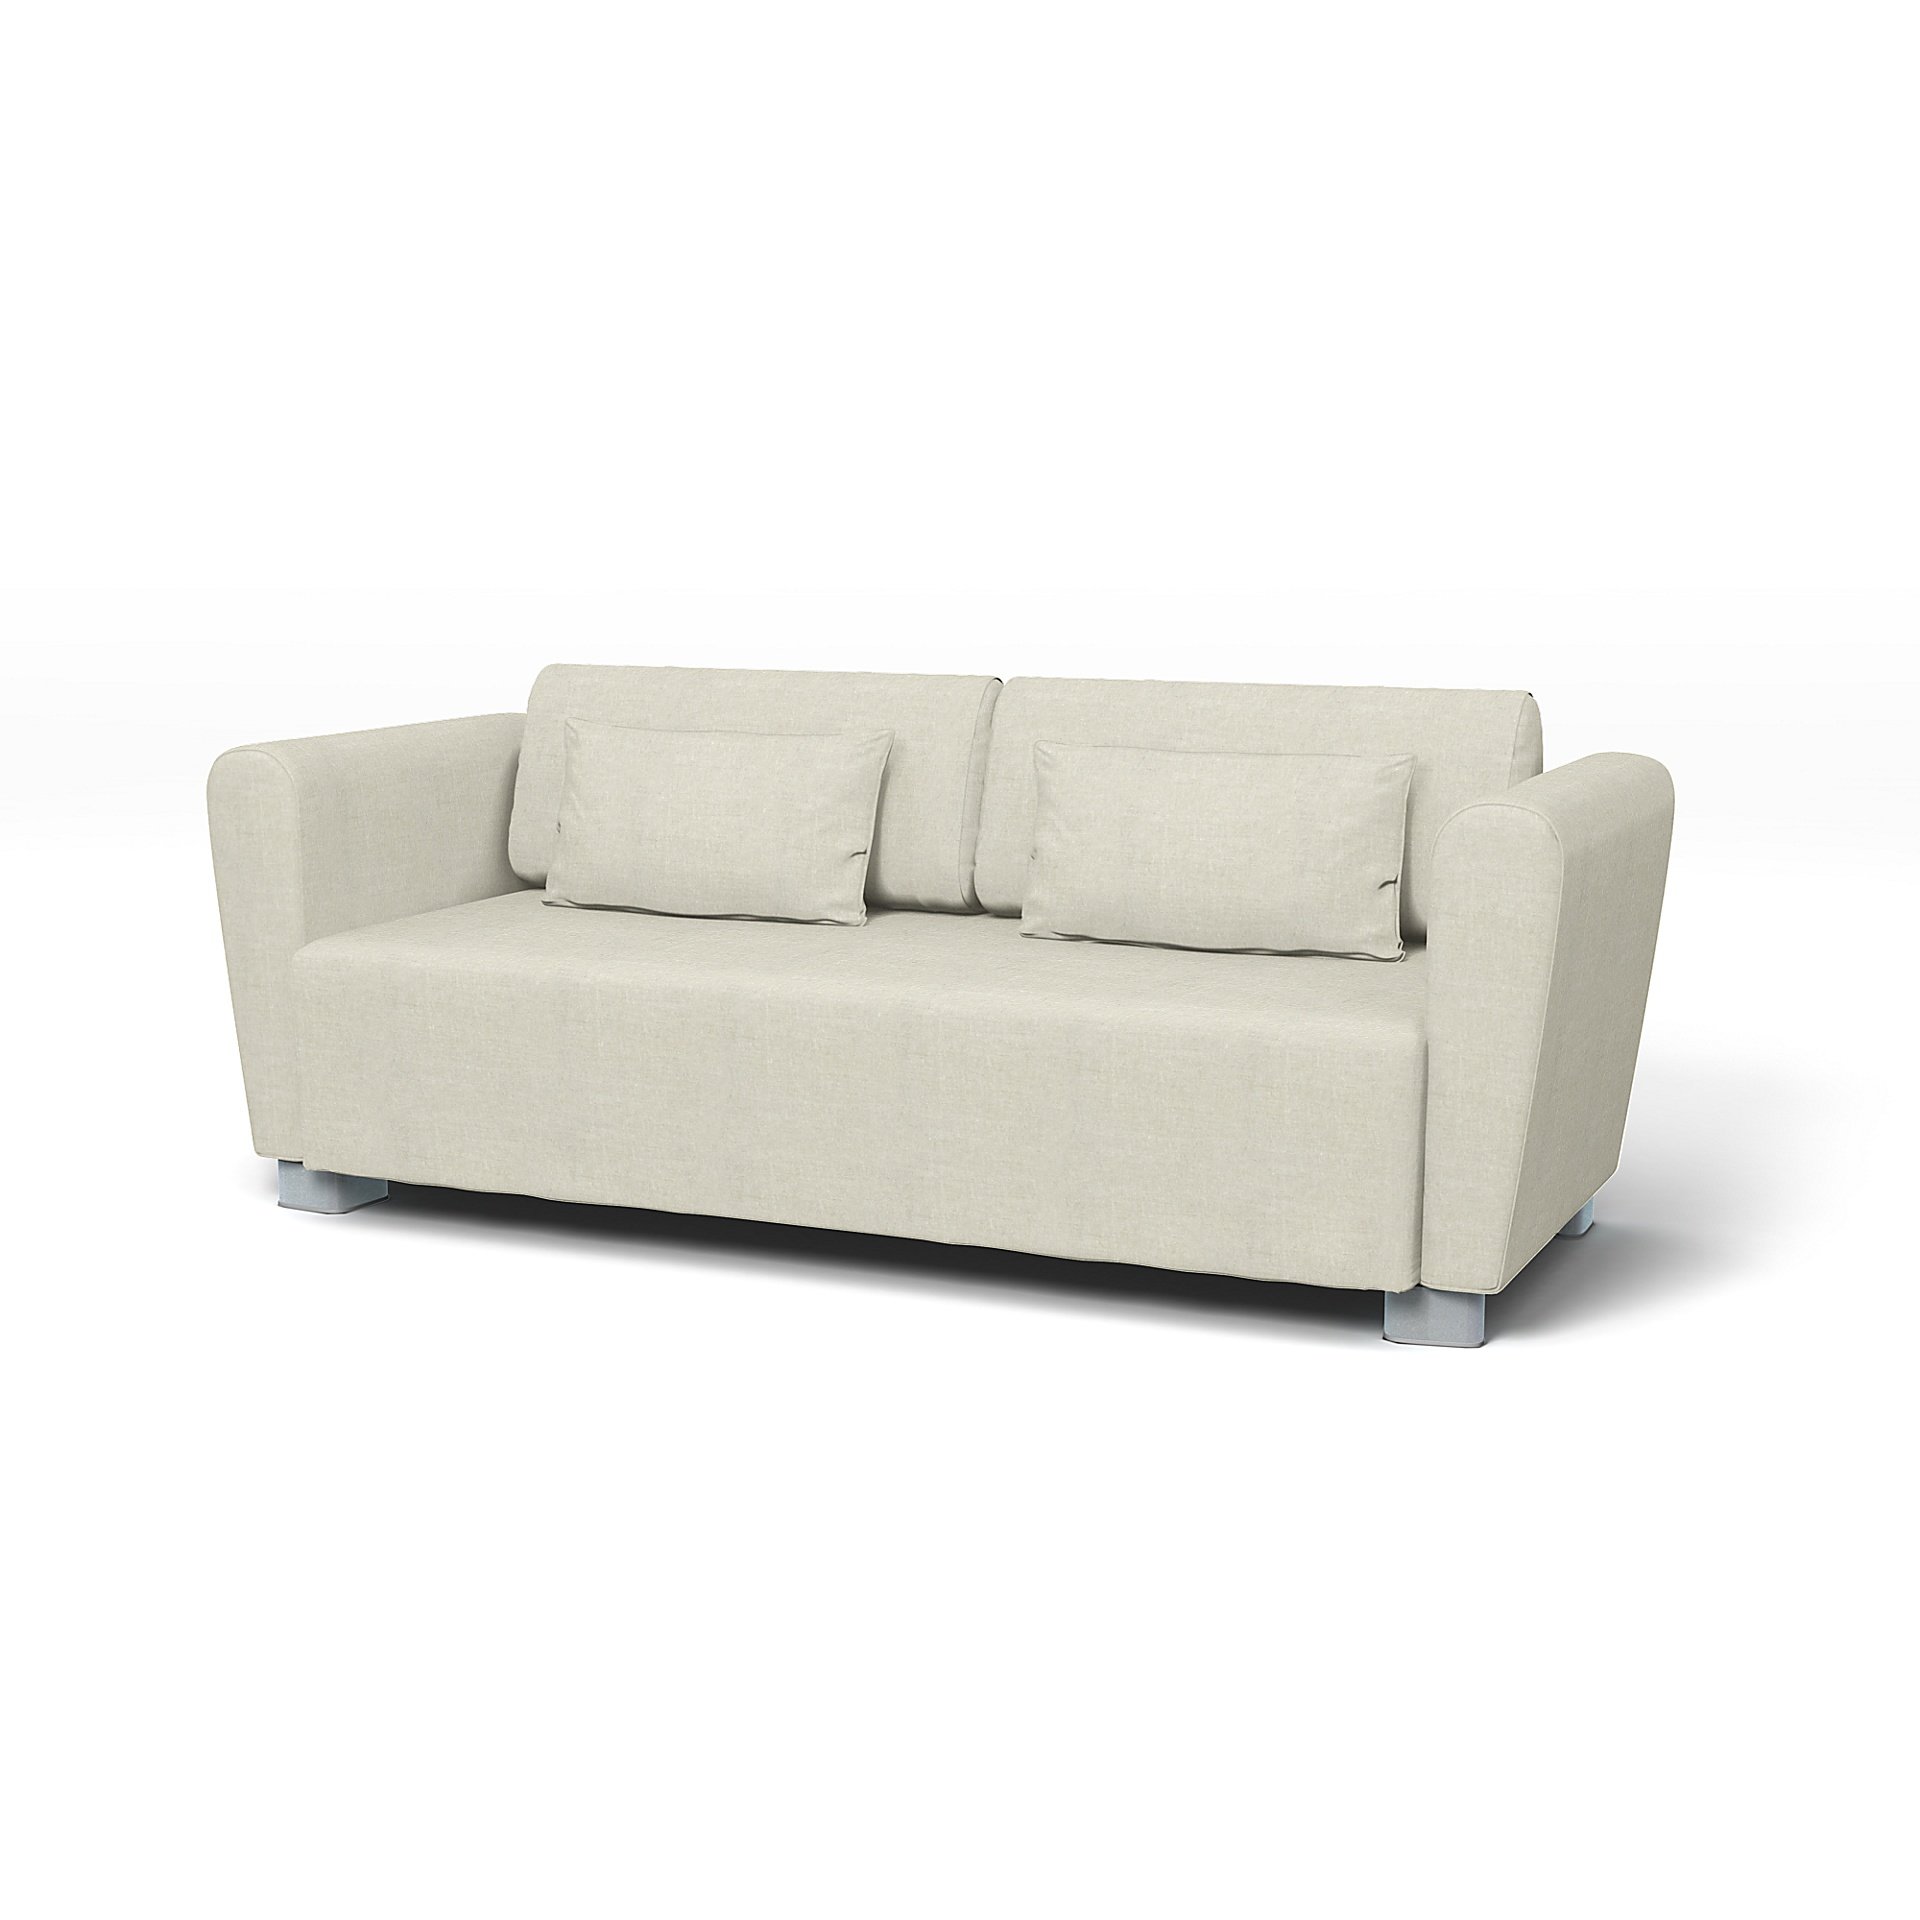 IKEA - Mysinge 2 Seater Sofa Cover, Natural, Linen - Bemz